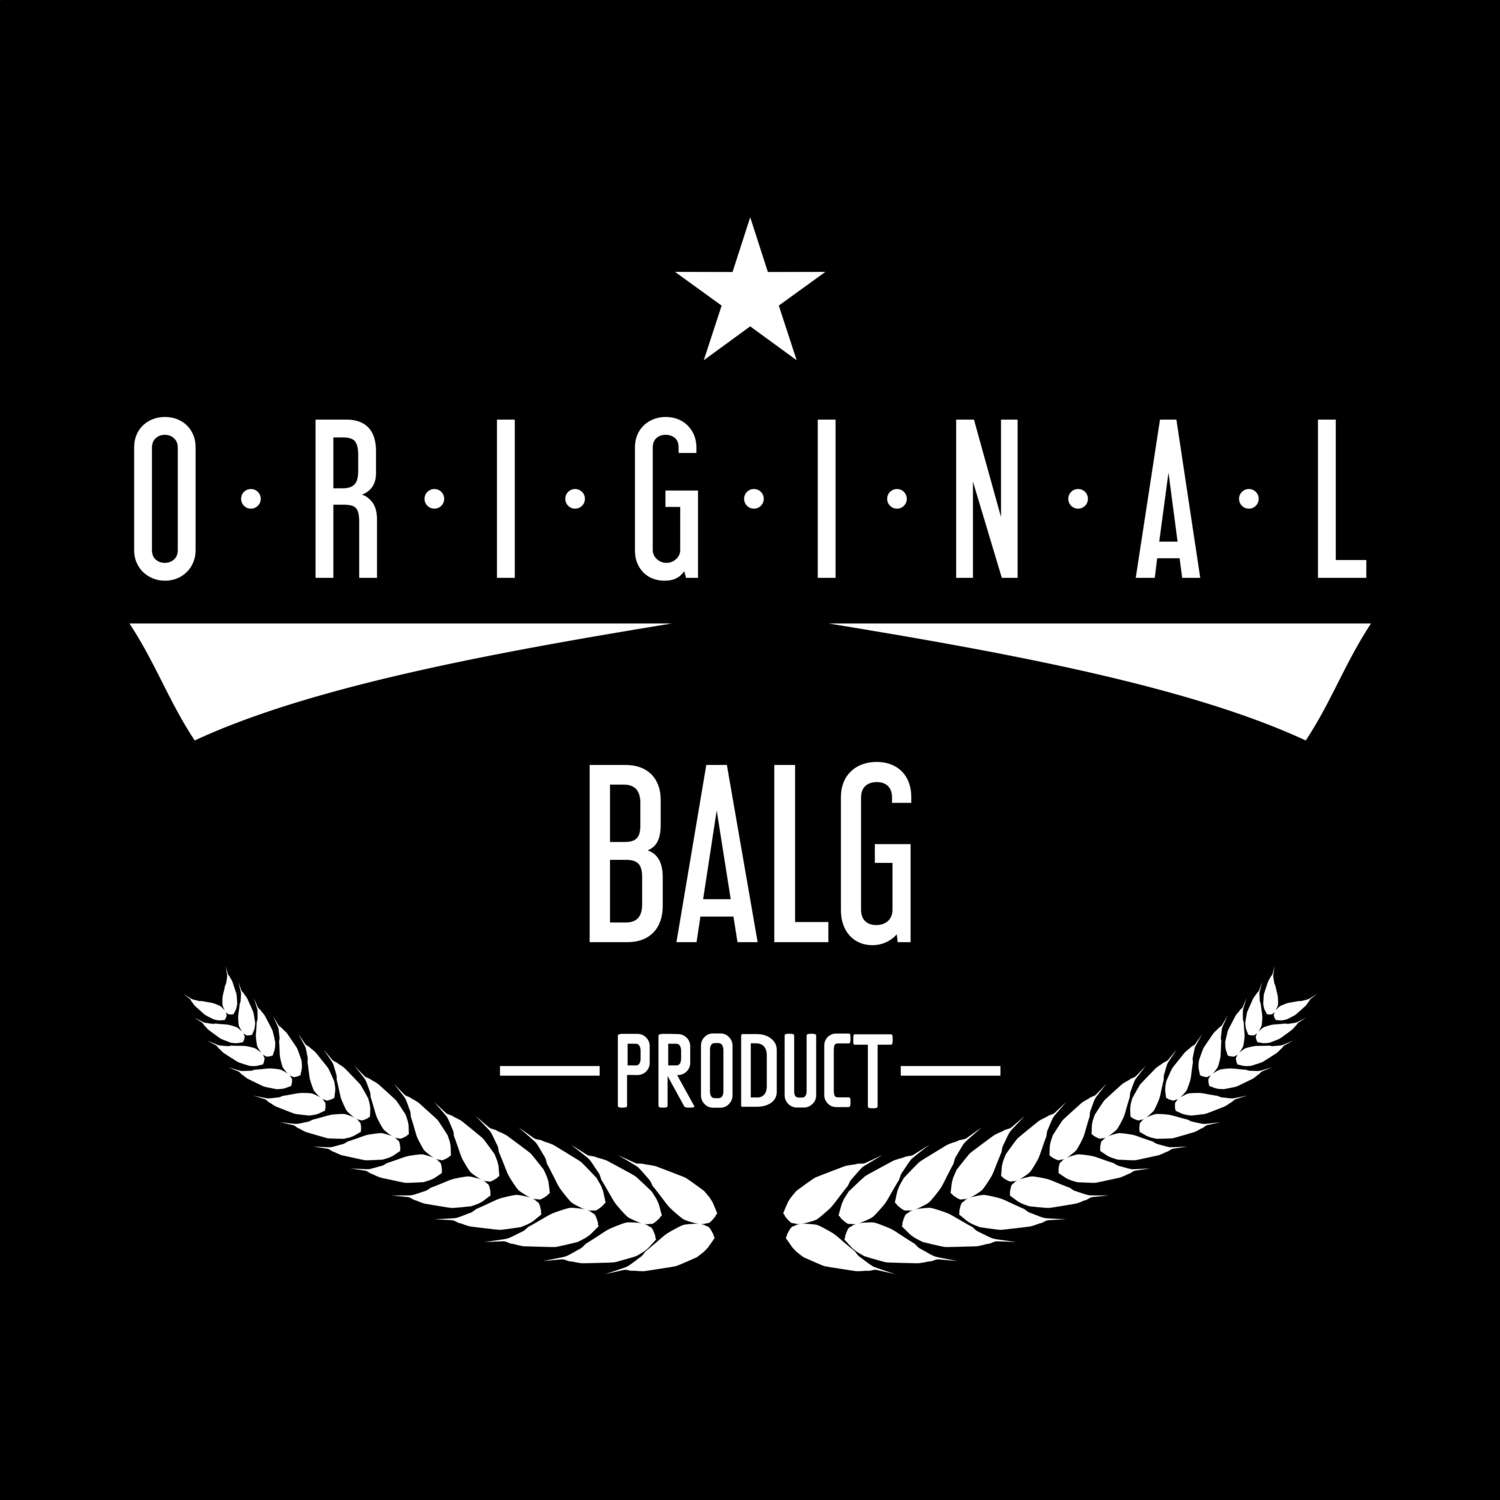 Balg T-Shirt »Original Product«